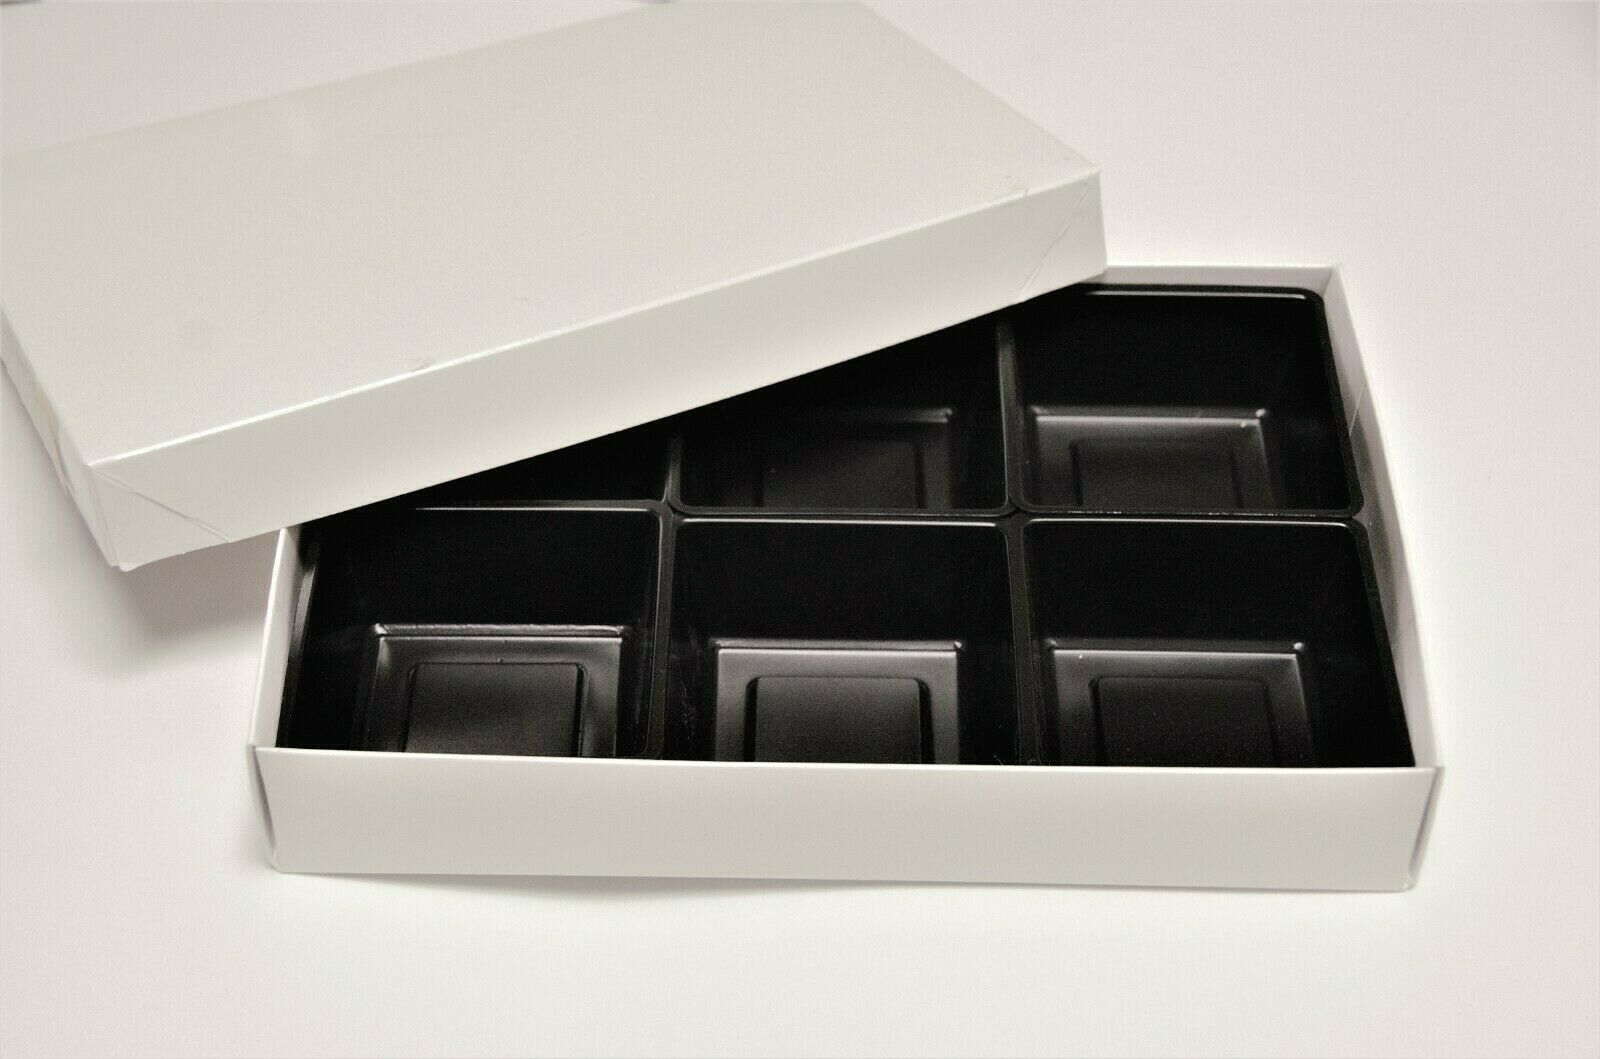 Origami Cake Slice Box Instructions - Paper Kawaii